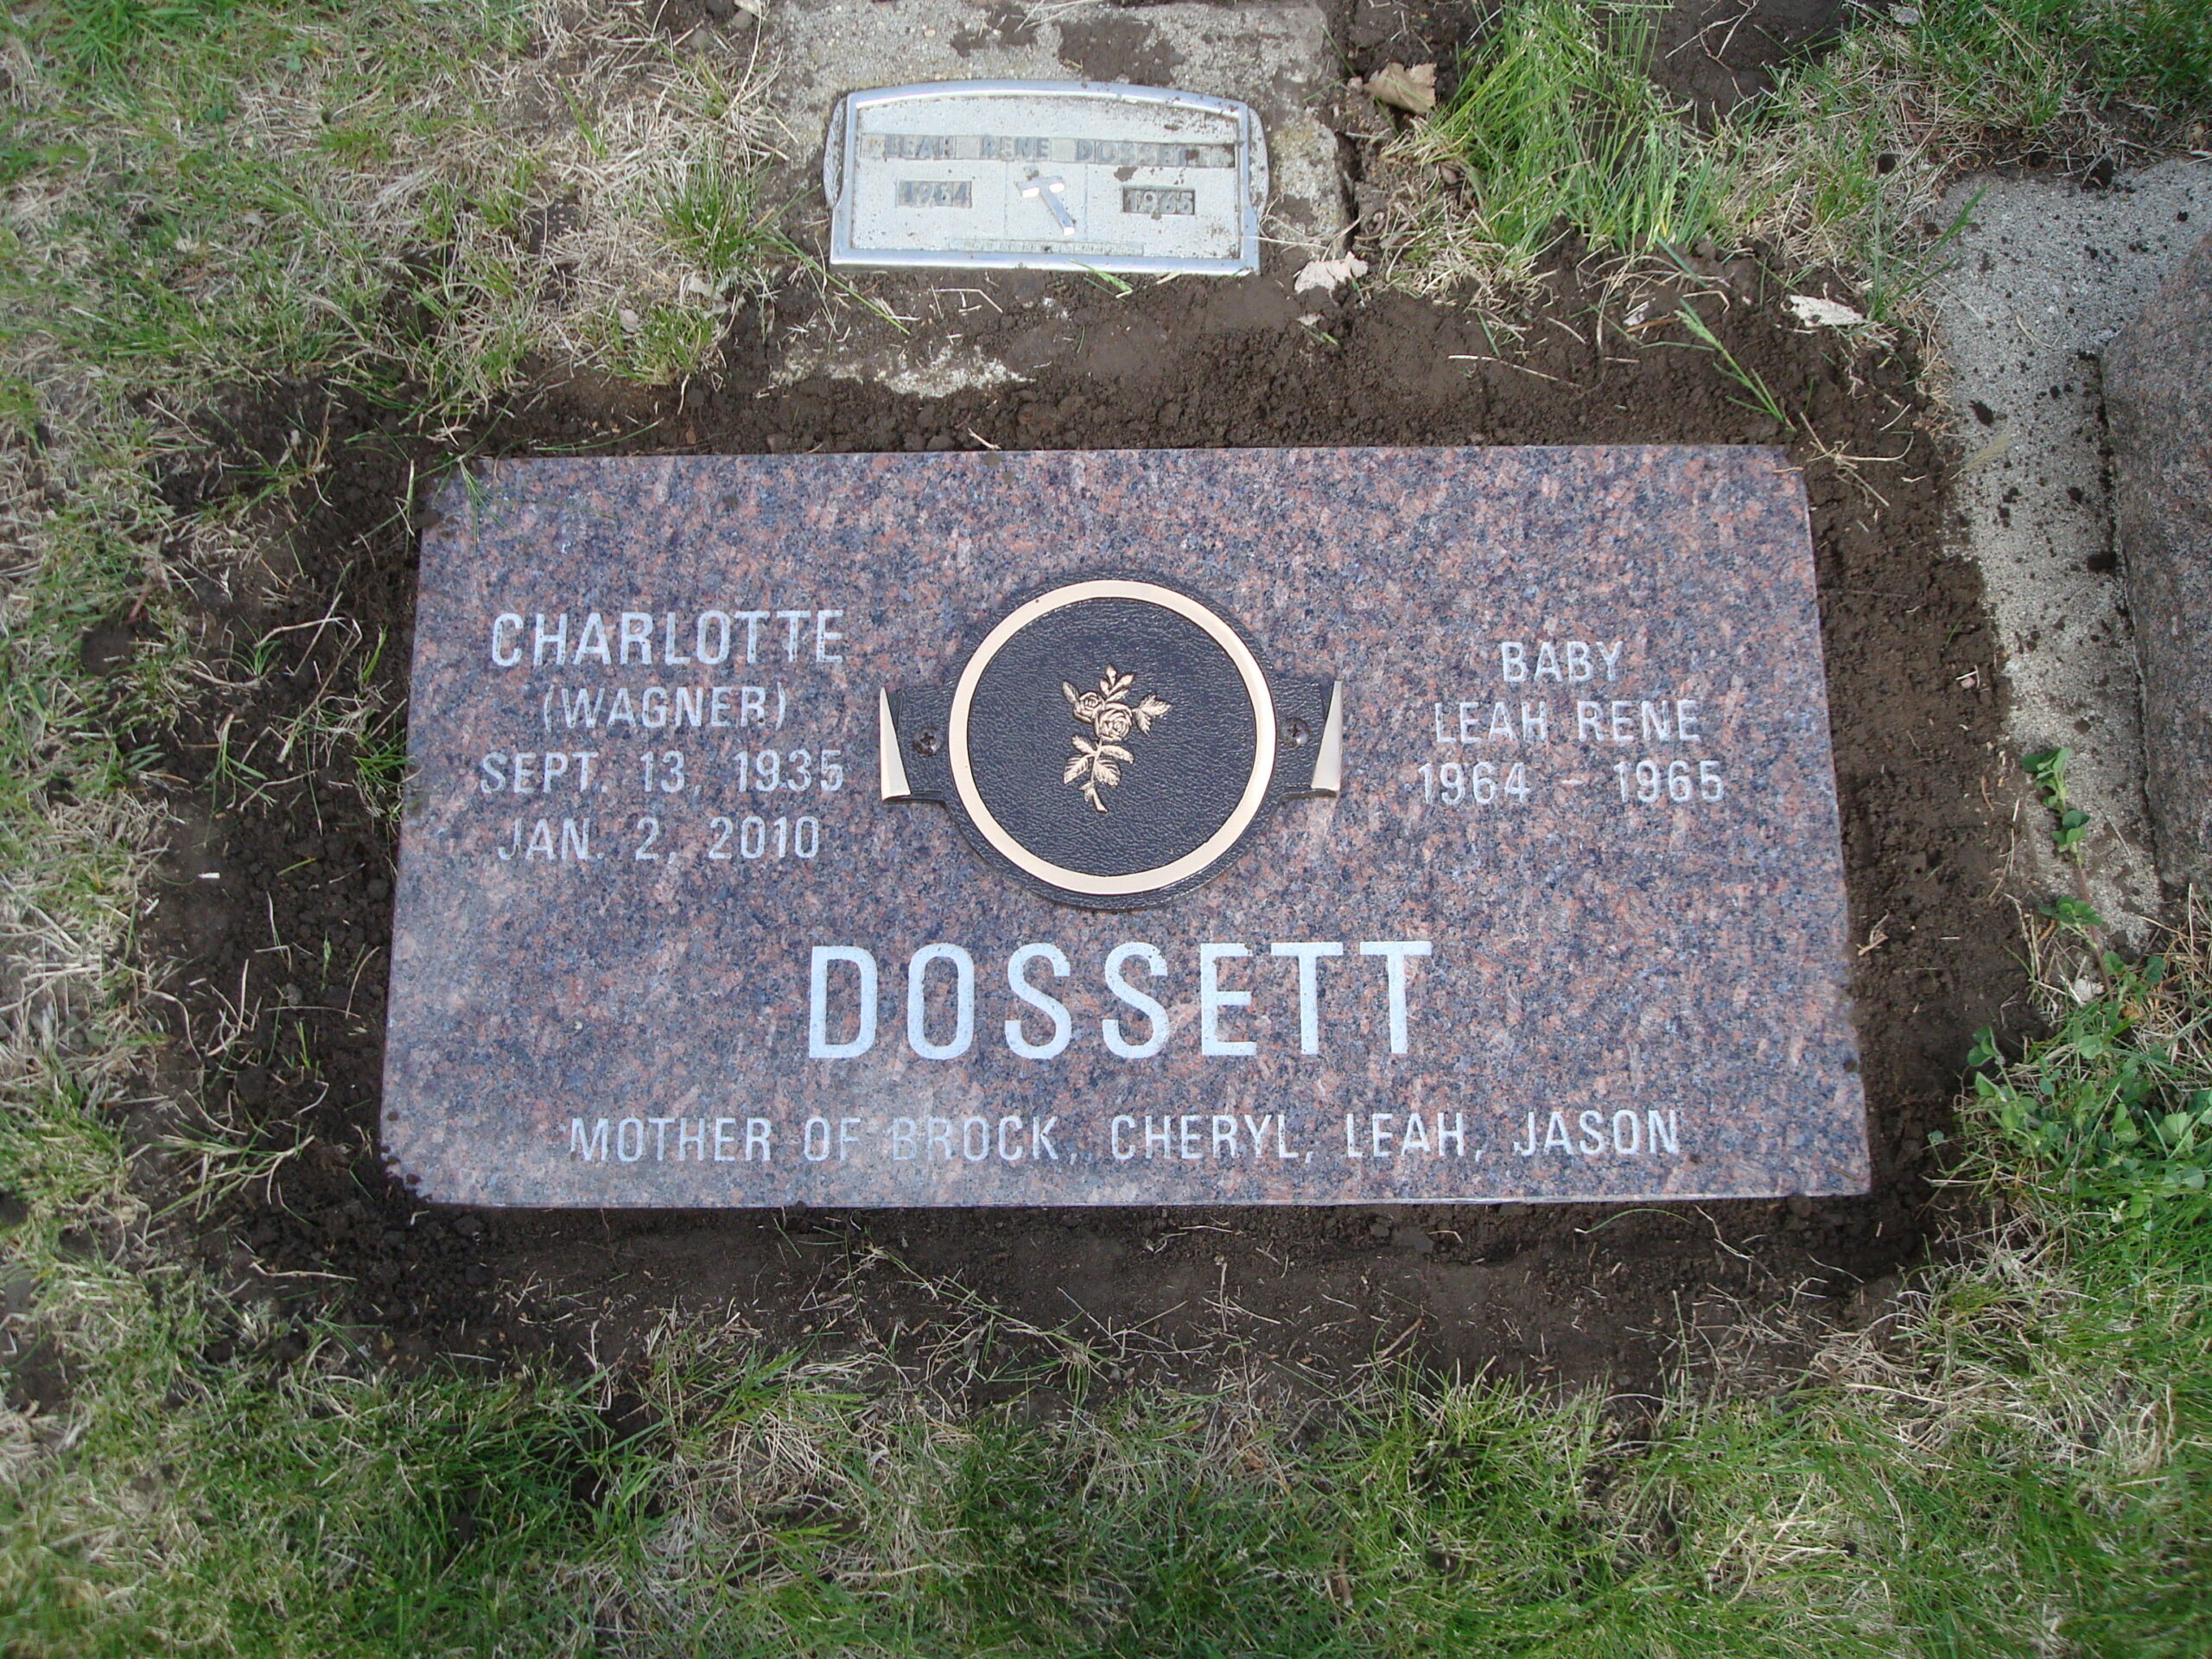 Dossett Cremation Memorial